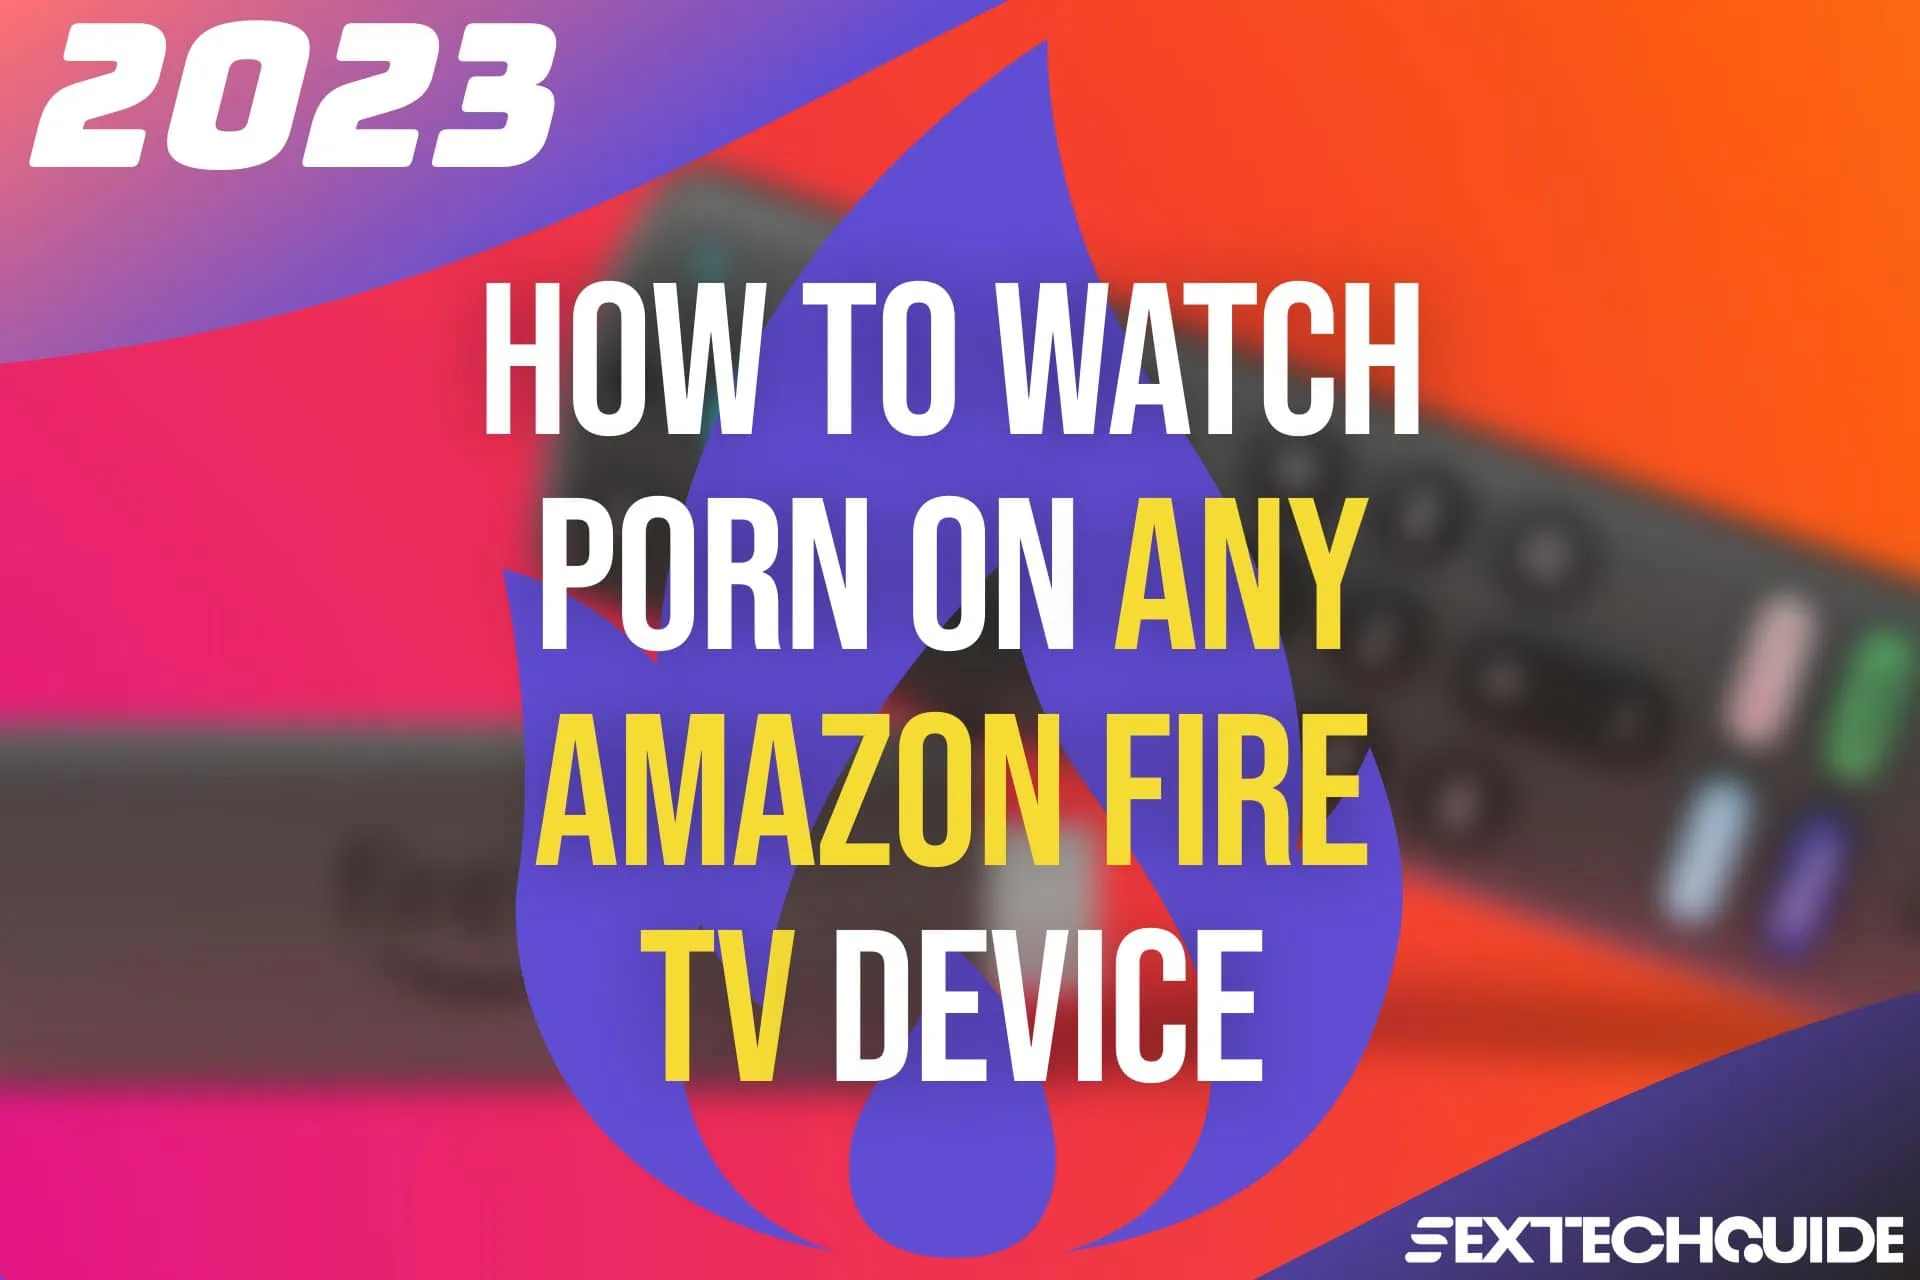 Fire Porn (2023): Find & Watch XXX Videos on Amazon Devices